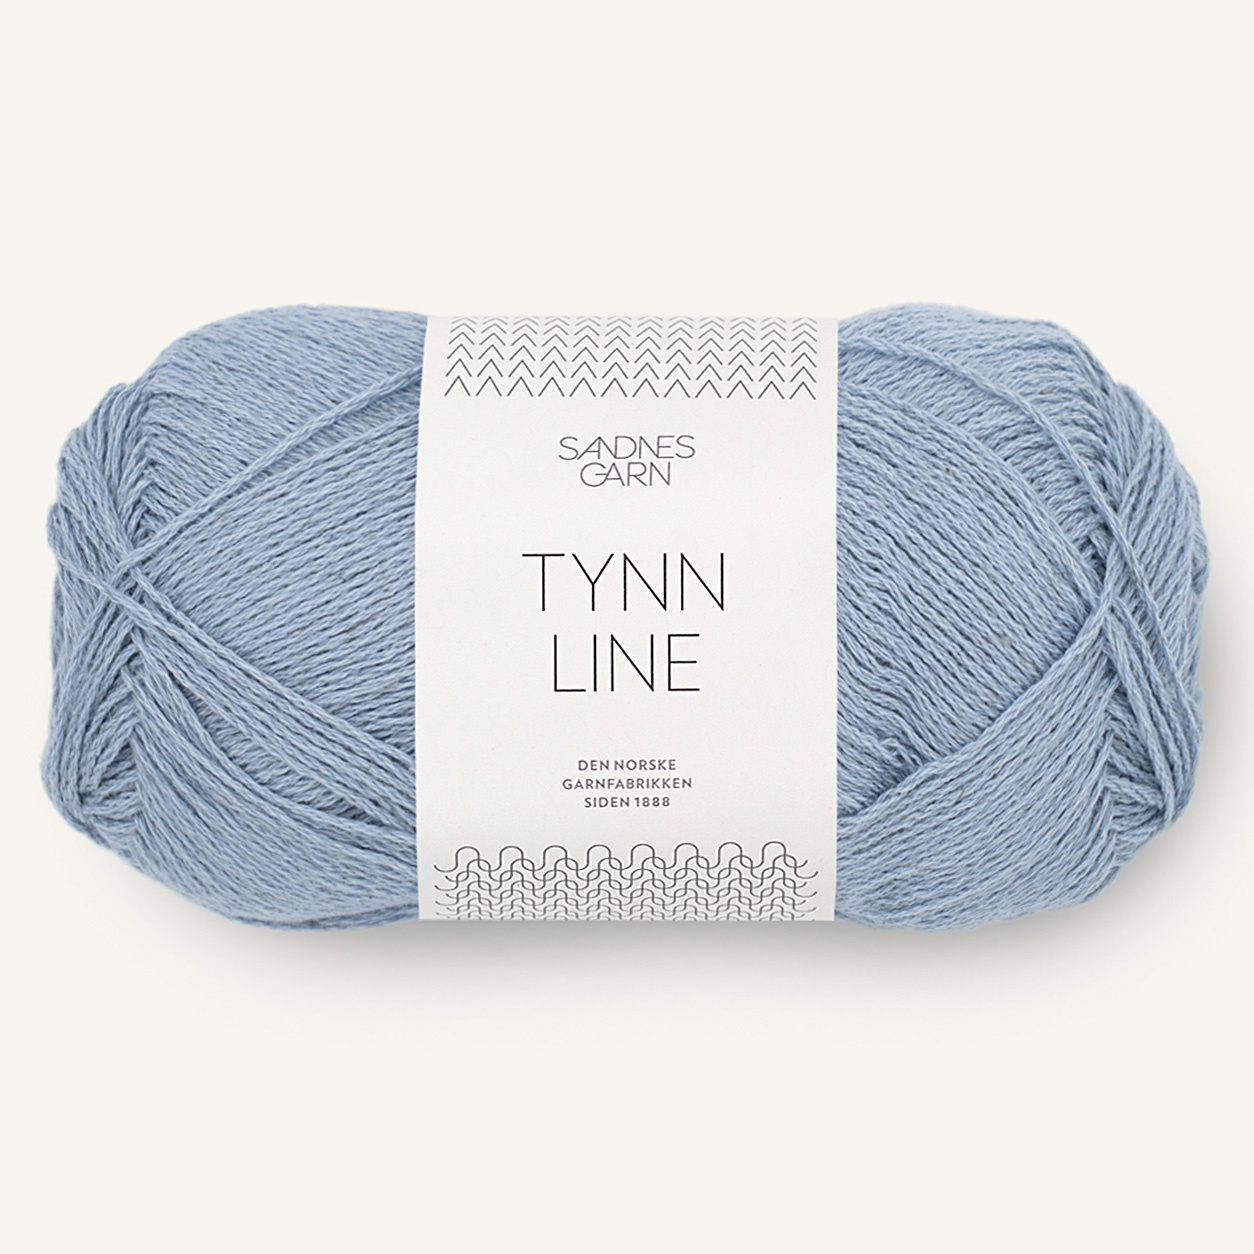 Sandnes Tynn Line, 6032, Hortensienblau